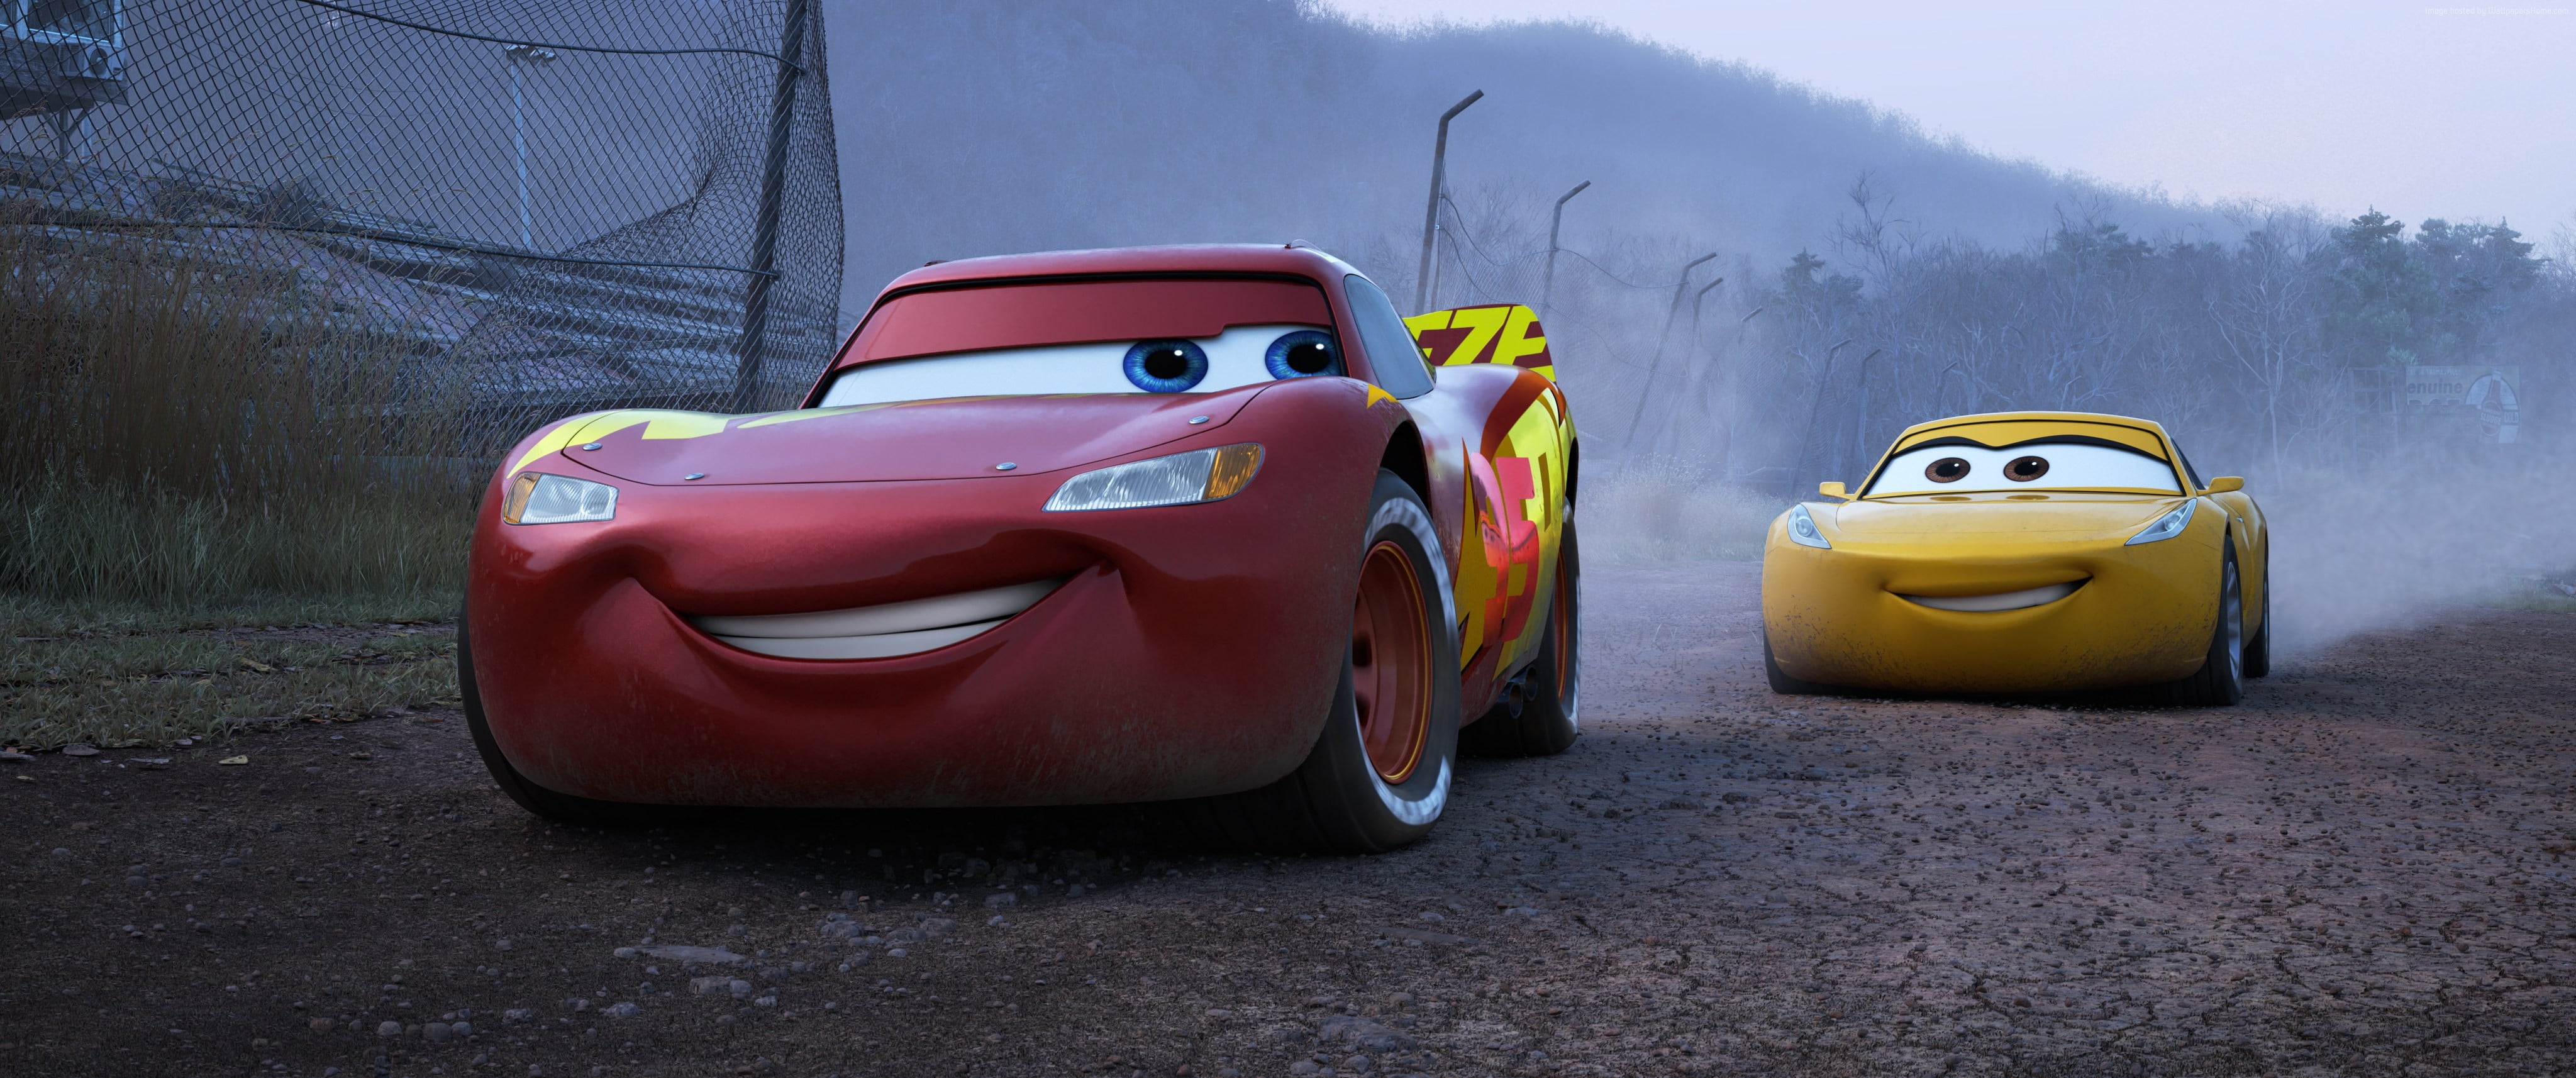 Disney Cars movie clip